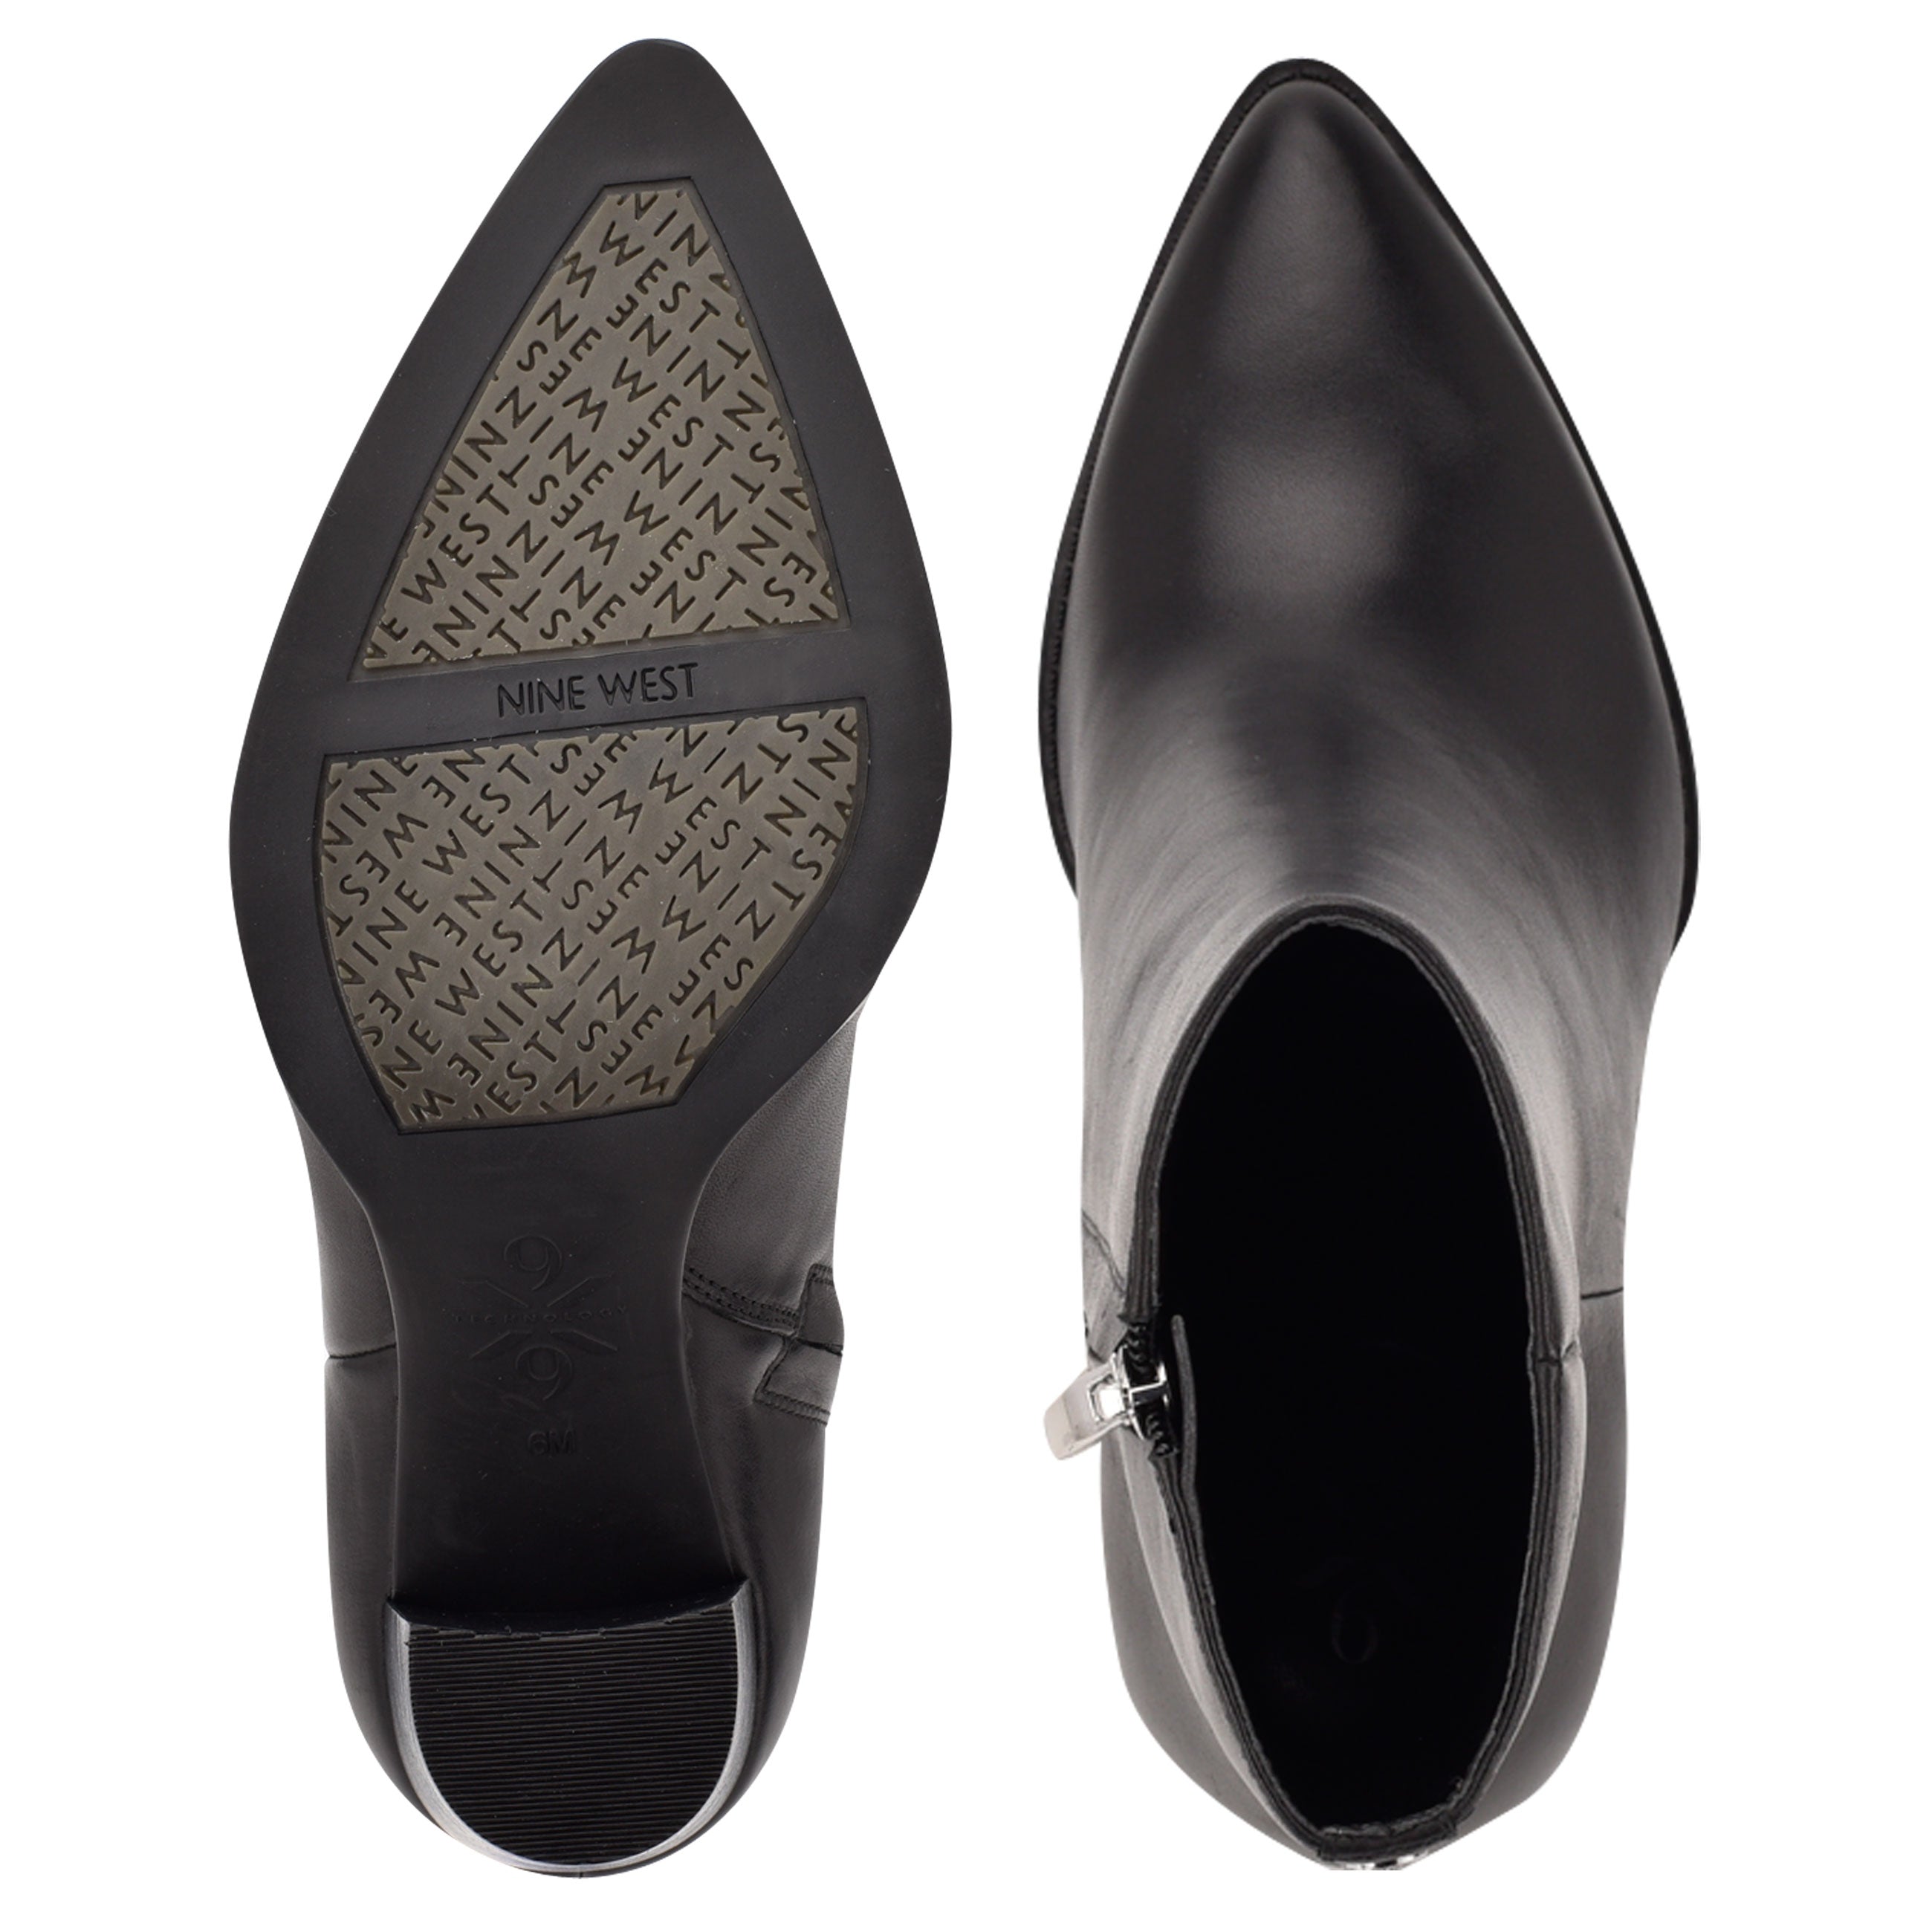 Raja Footwear in Waidhan,Singrauli - Best Leather Safety Shoe Dealers in  Singrauli - Justdial